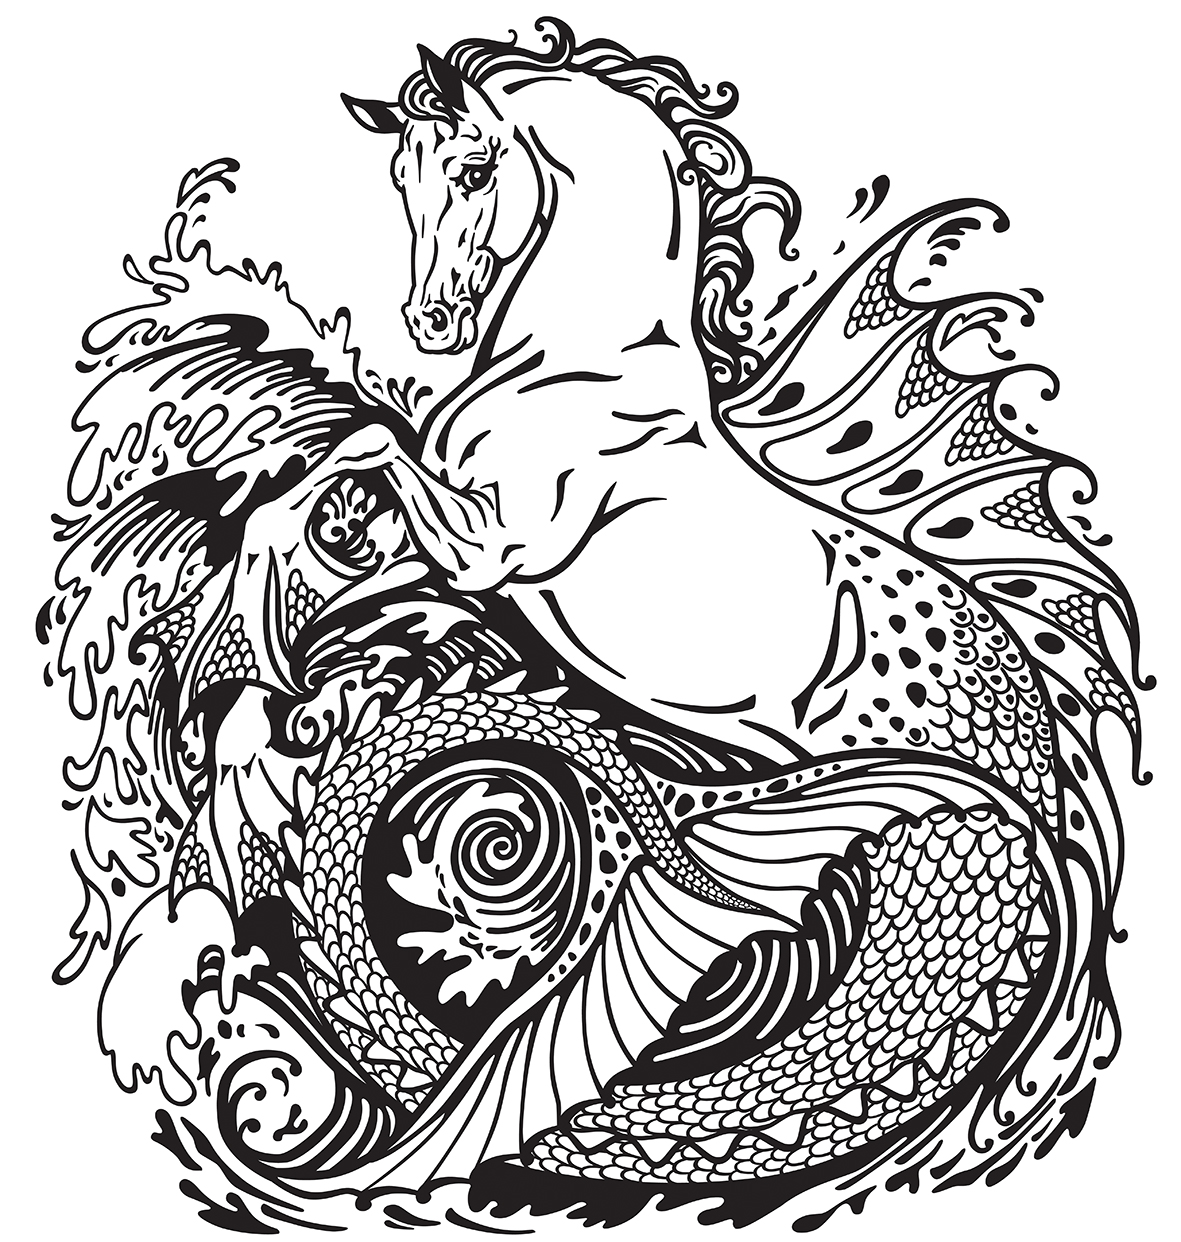 An illustration of the mythical Scottish "kelpie" © insima